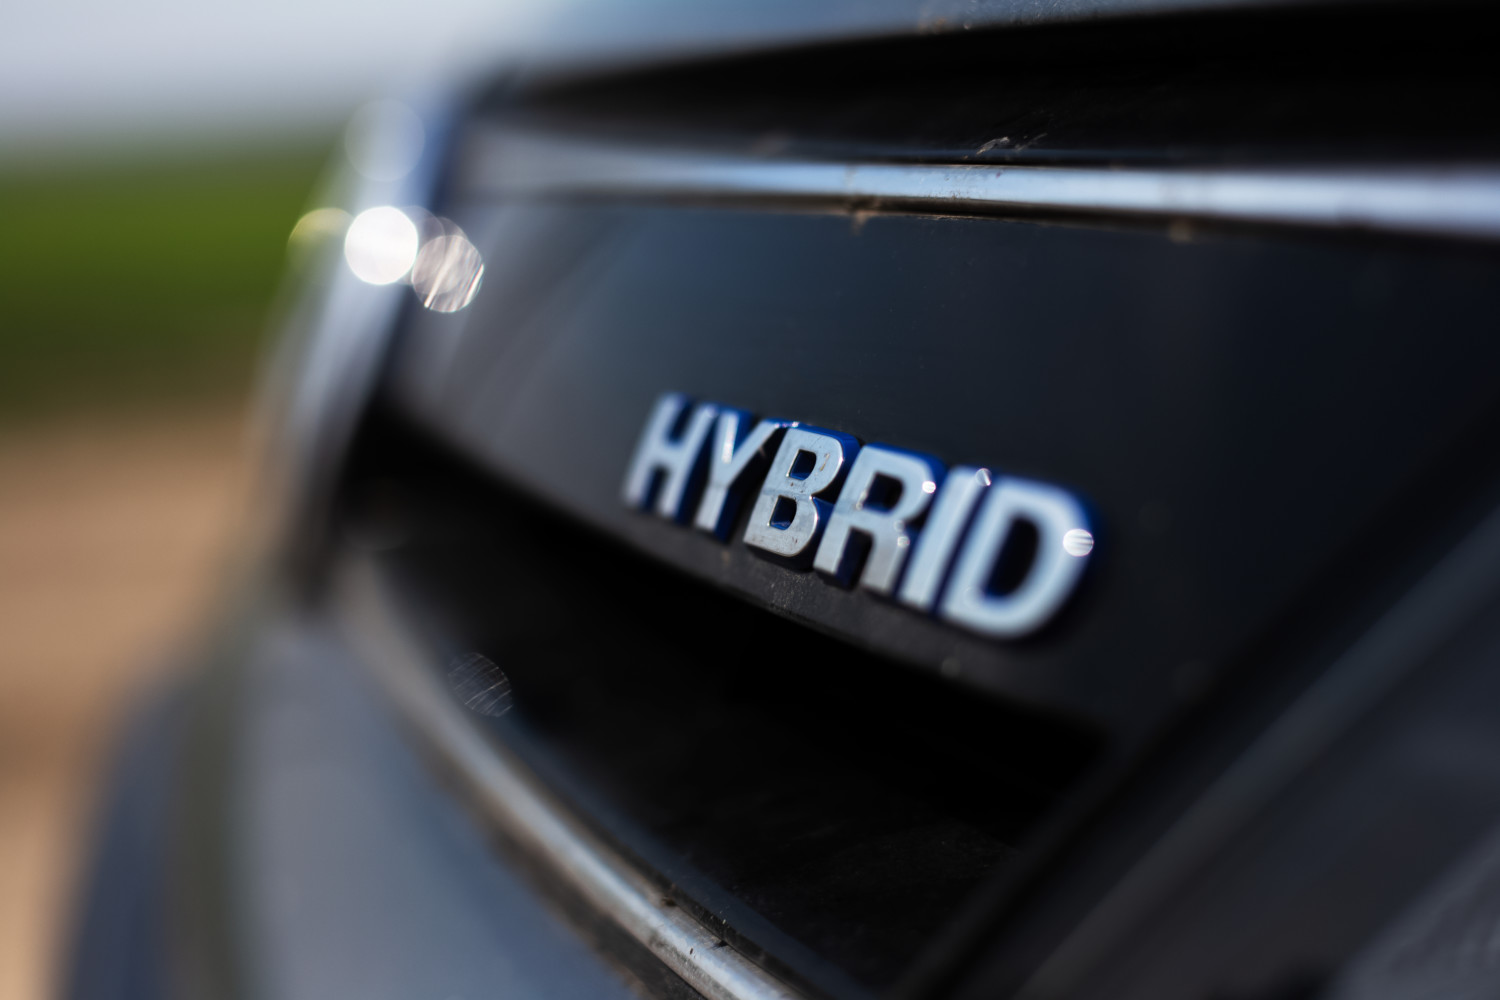 Hybrid, ecologic car symbol.